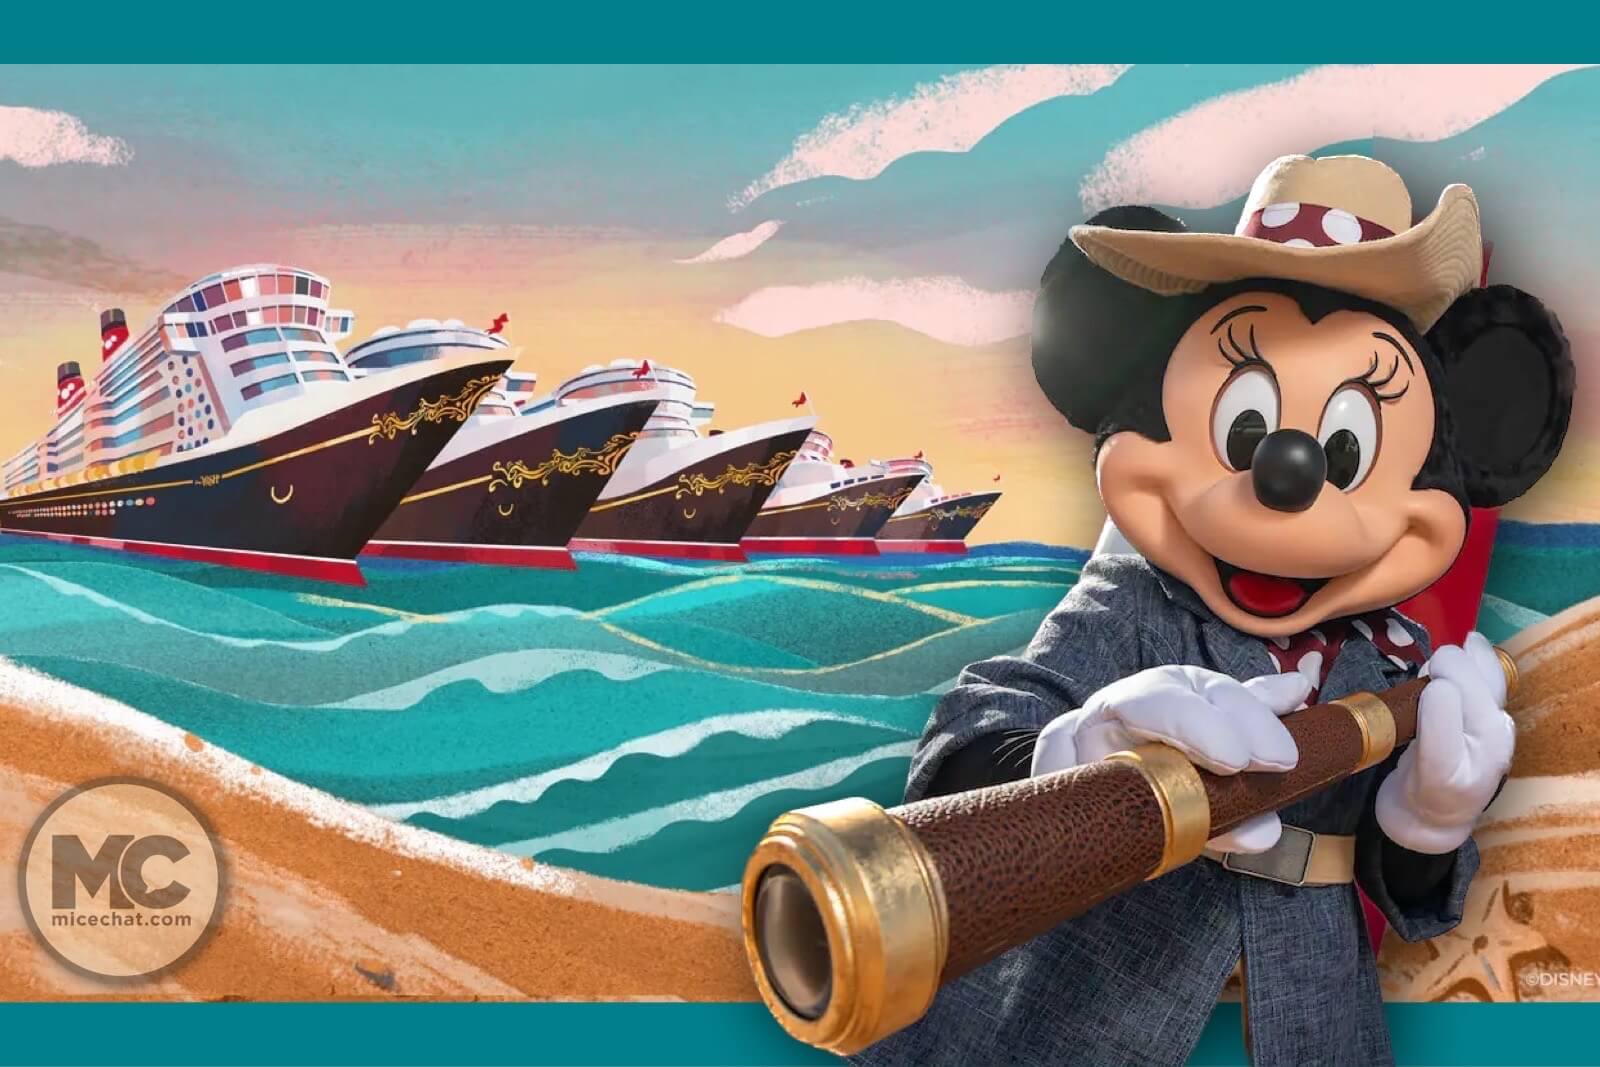 New Pirate-Themed Spirit Jersey Sails into Disneyland - Disneyland